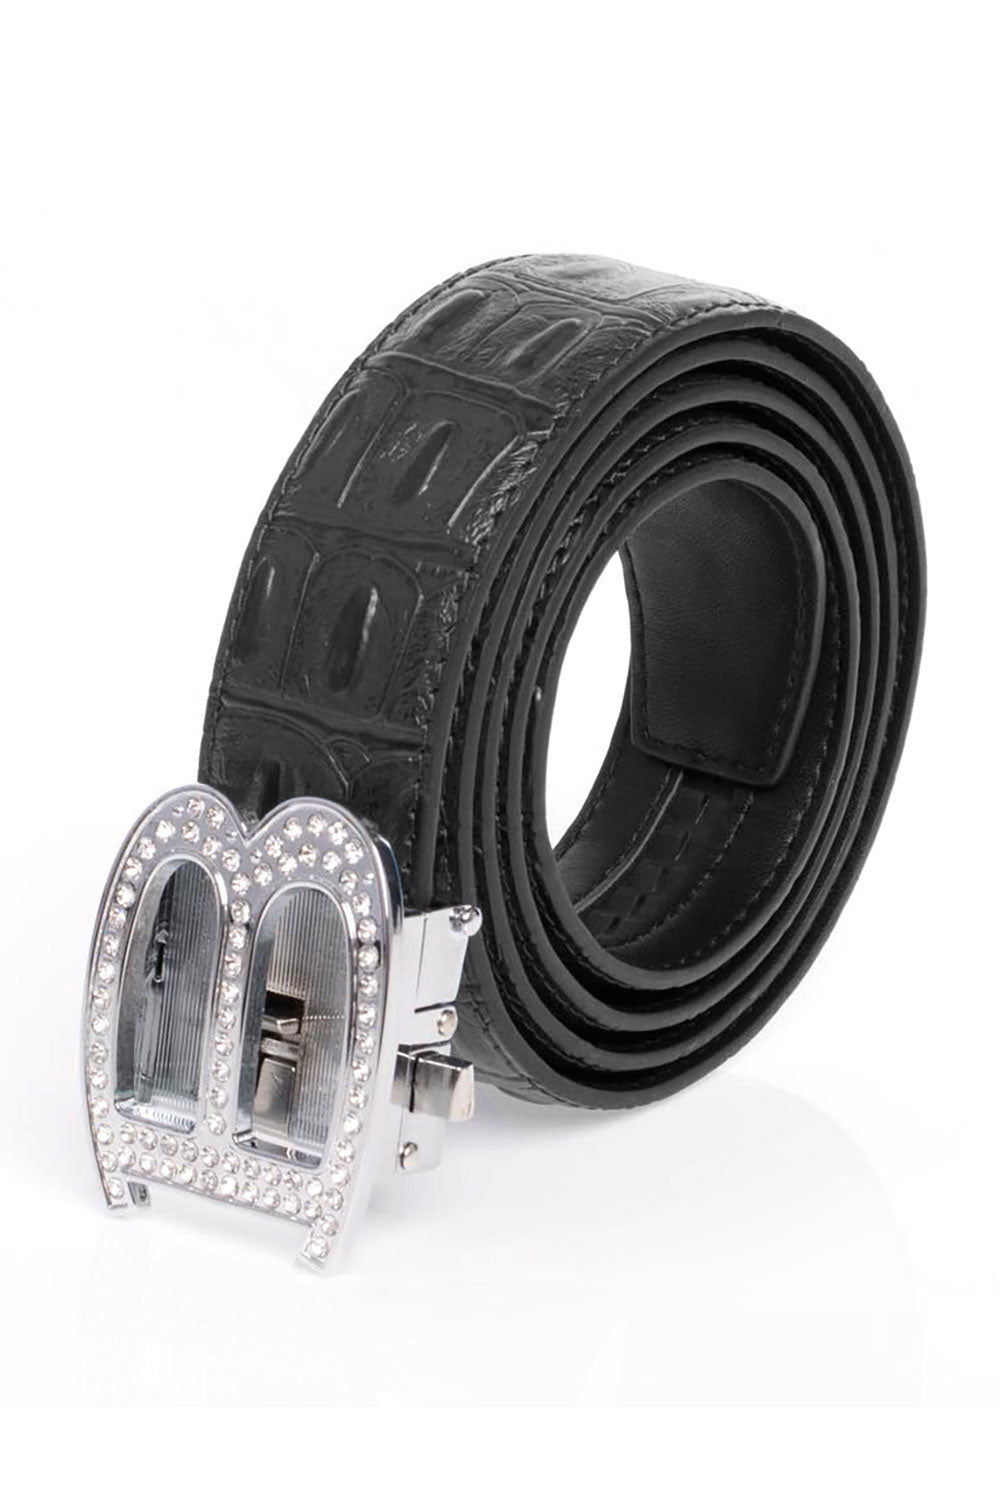 Barabas "B" Shiny Silver/Black Croc Adjustable Luxury Leather Dress Belt - Dudes Boutique